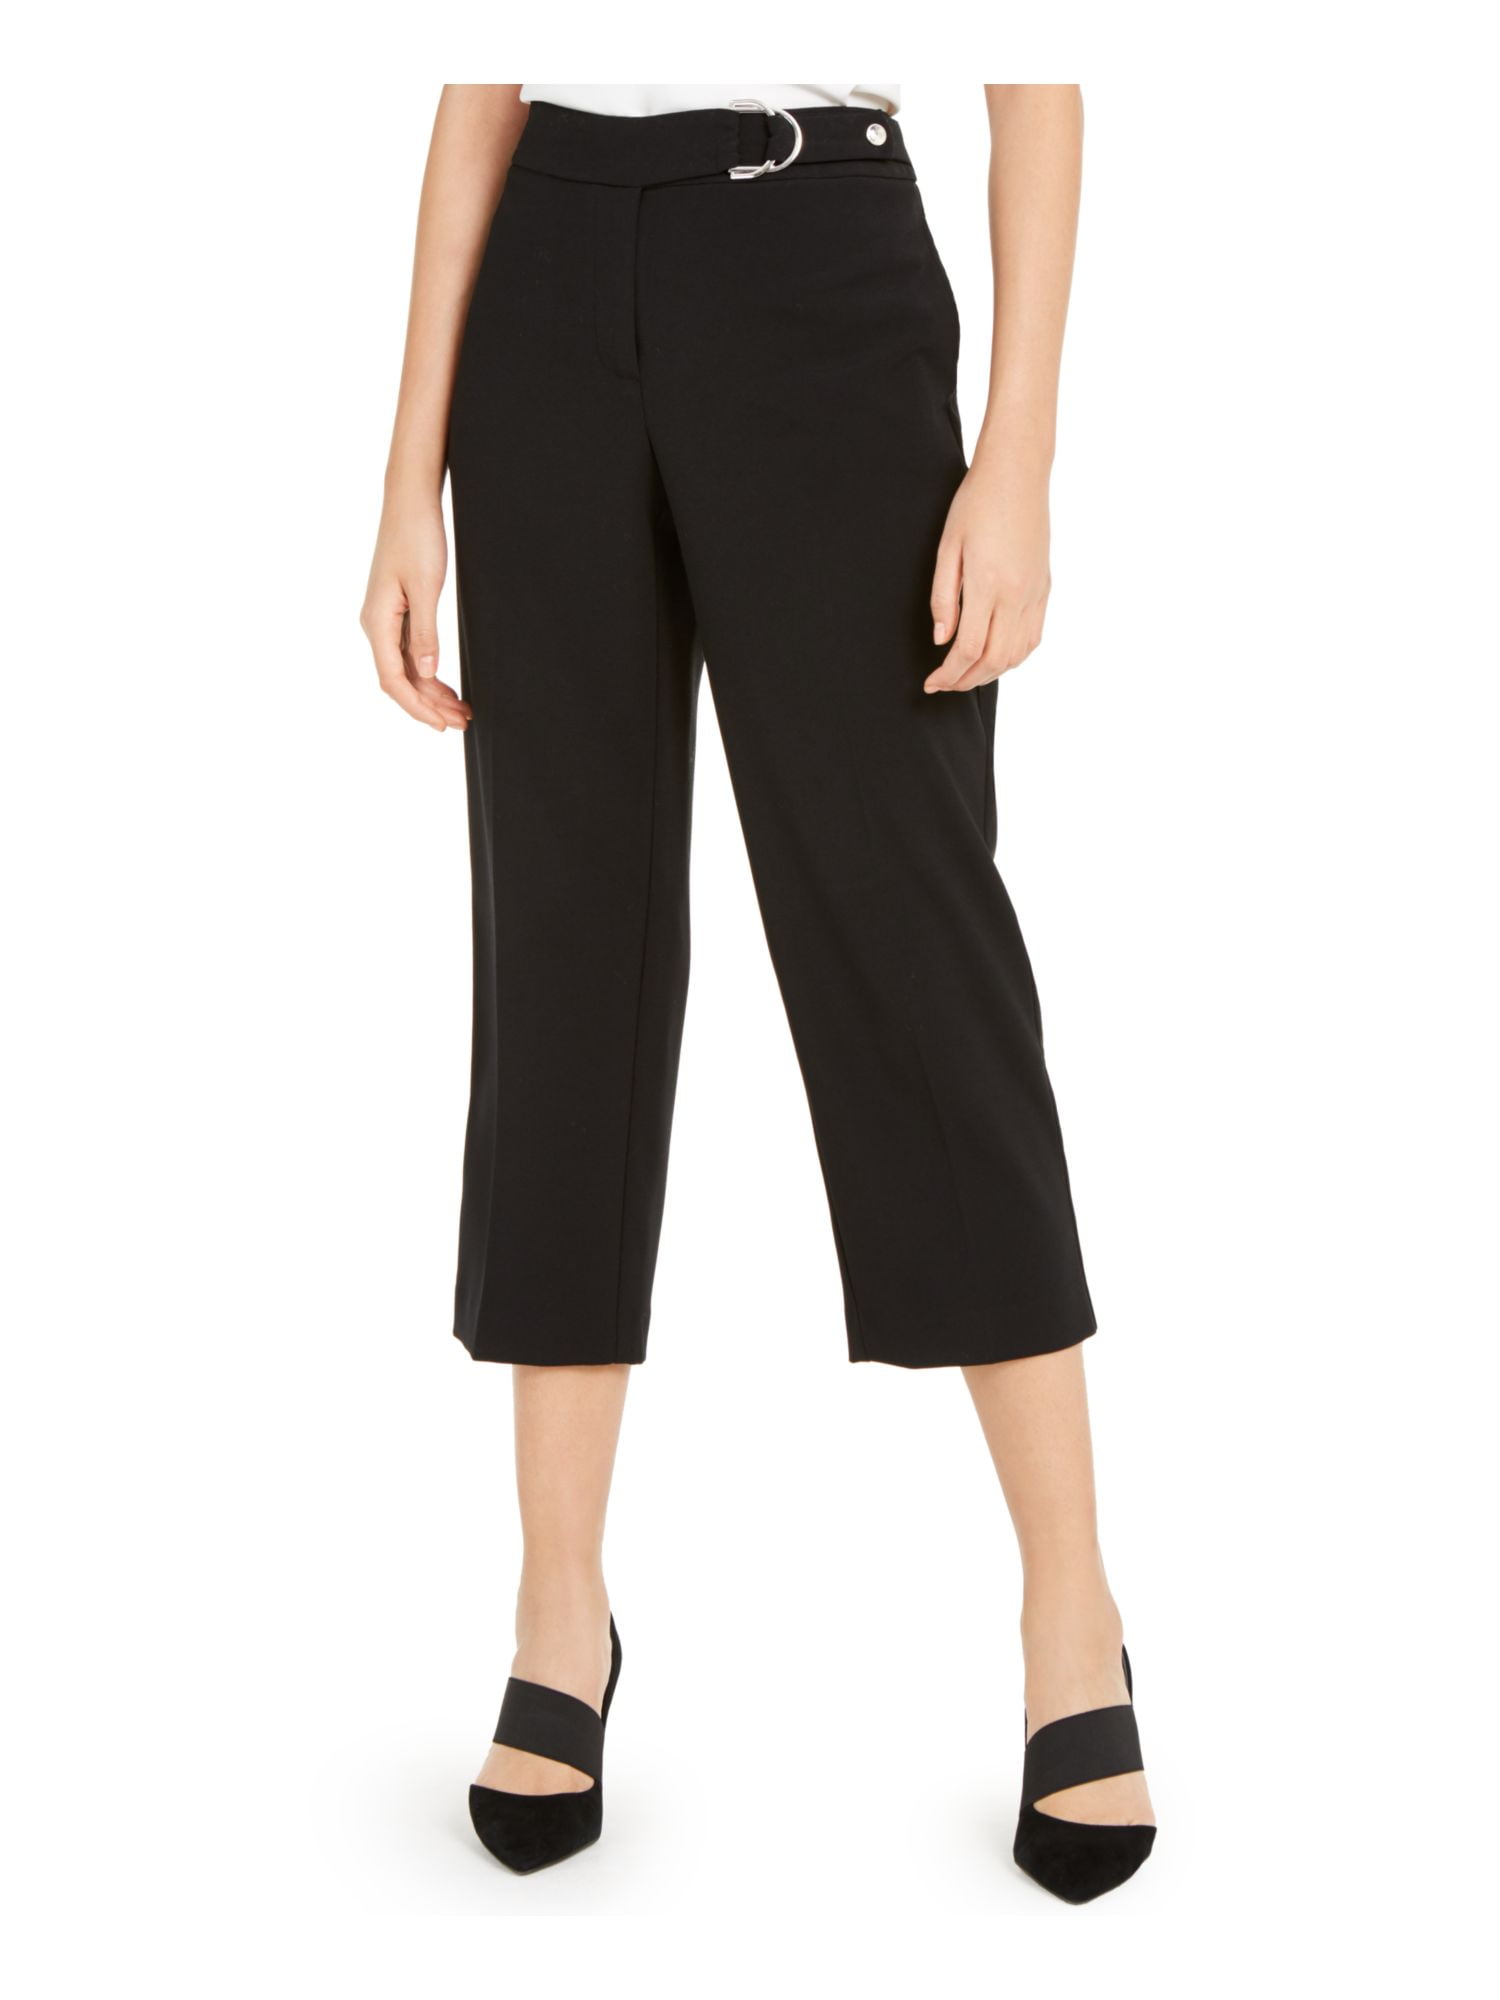 ALFANI Womens Black Belted Pocketed Zippered Capri Pants Size: 14